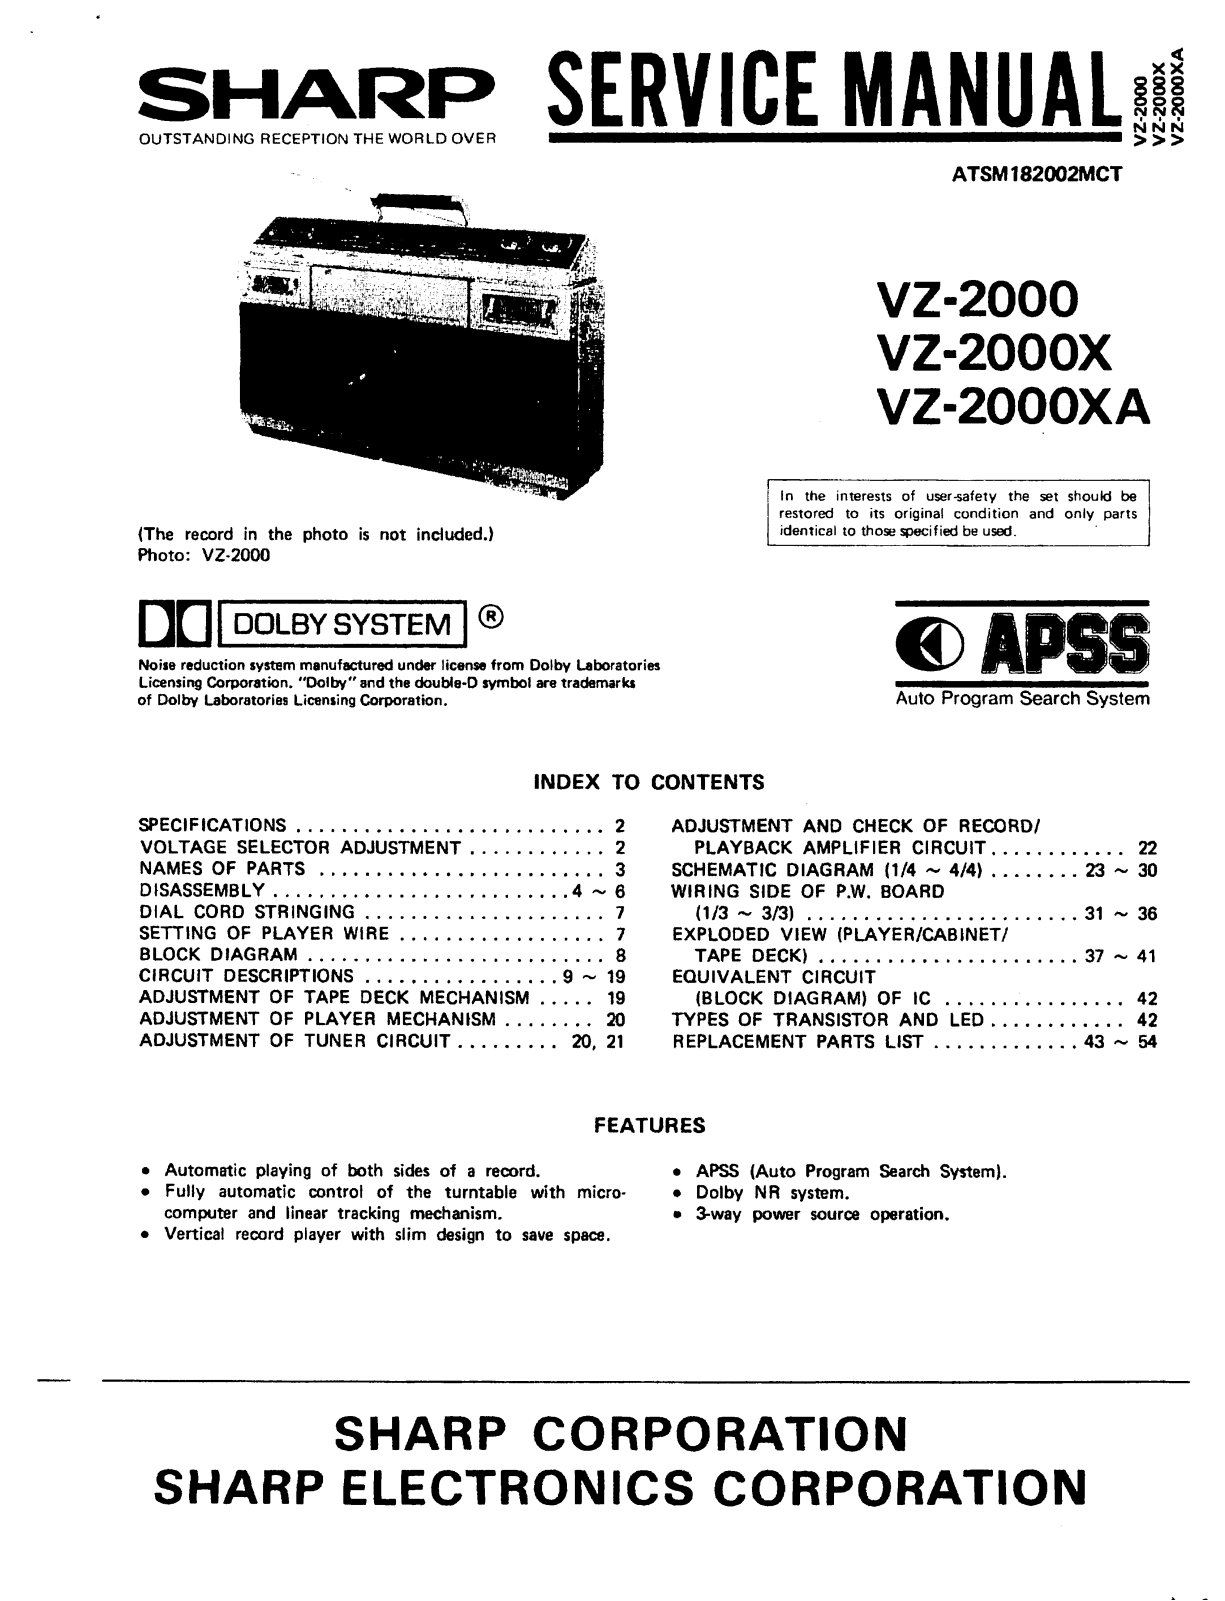 Sharp VZ-2000, VZ-2000-X, VZ-2000-XA Service manual